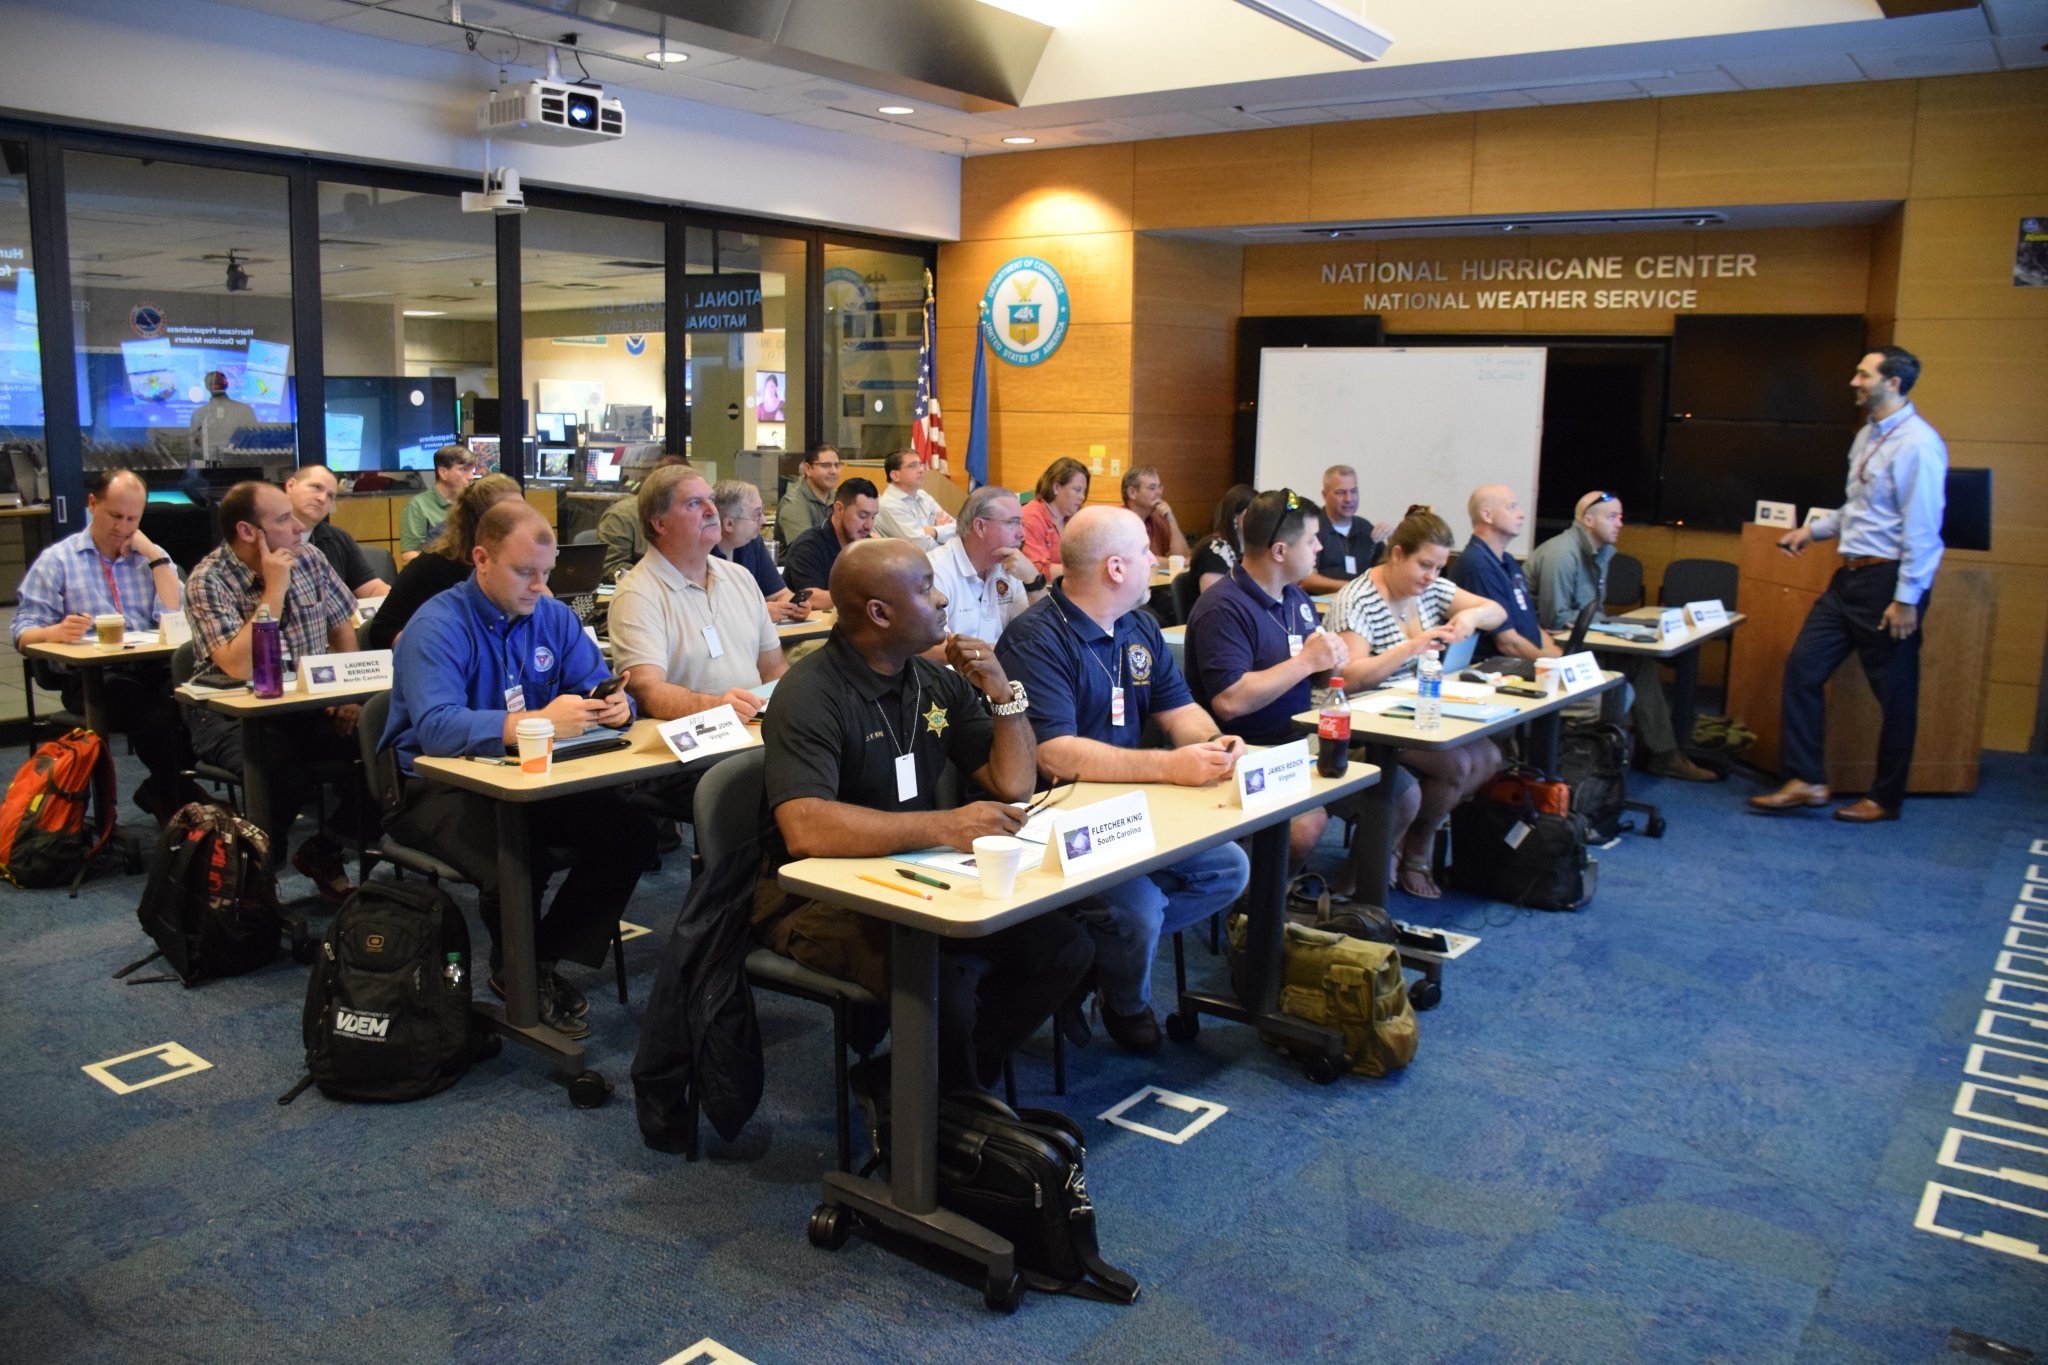 Brandon Bolinski teaches a class at the National Hurricane Center.